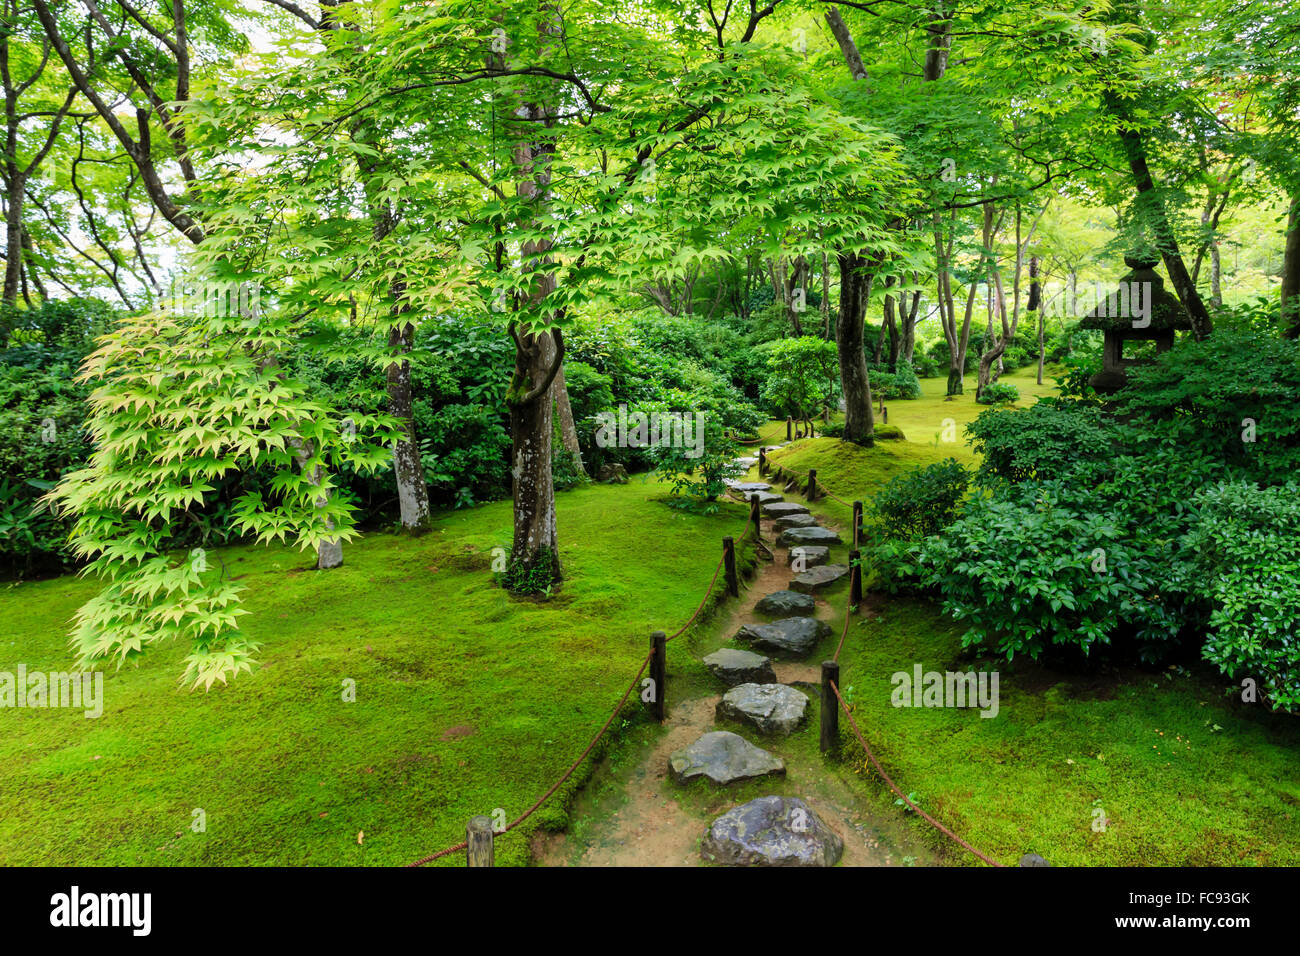 Okochi Sanso Villa garden, stone path through vibrant leafy trees with moss covered ground in summer, Arashiyama, Kyoto, Japan Stock Photo